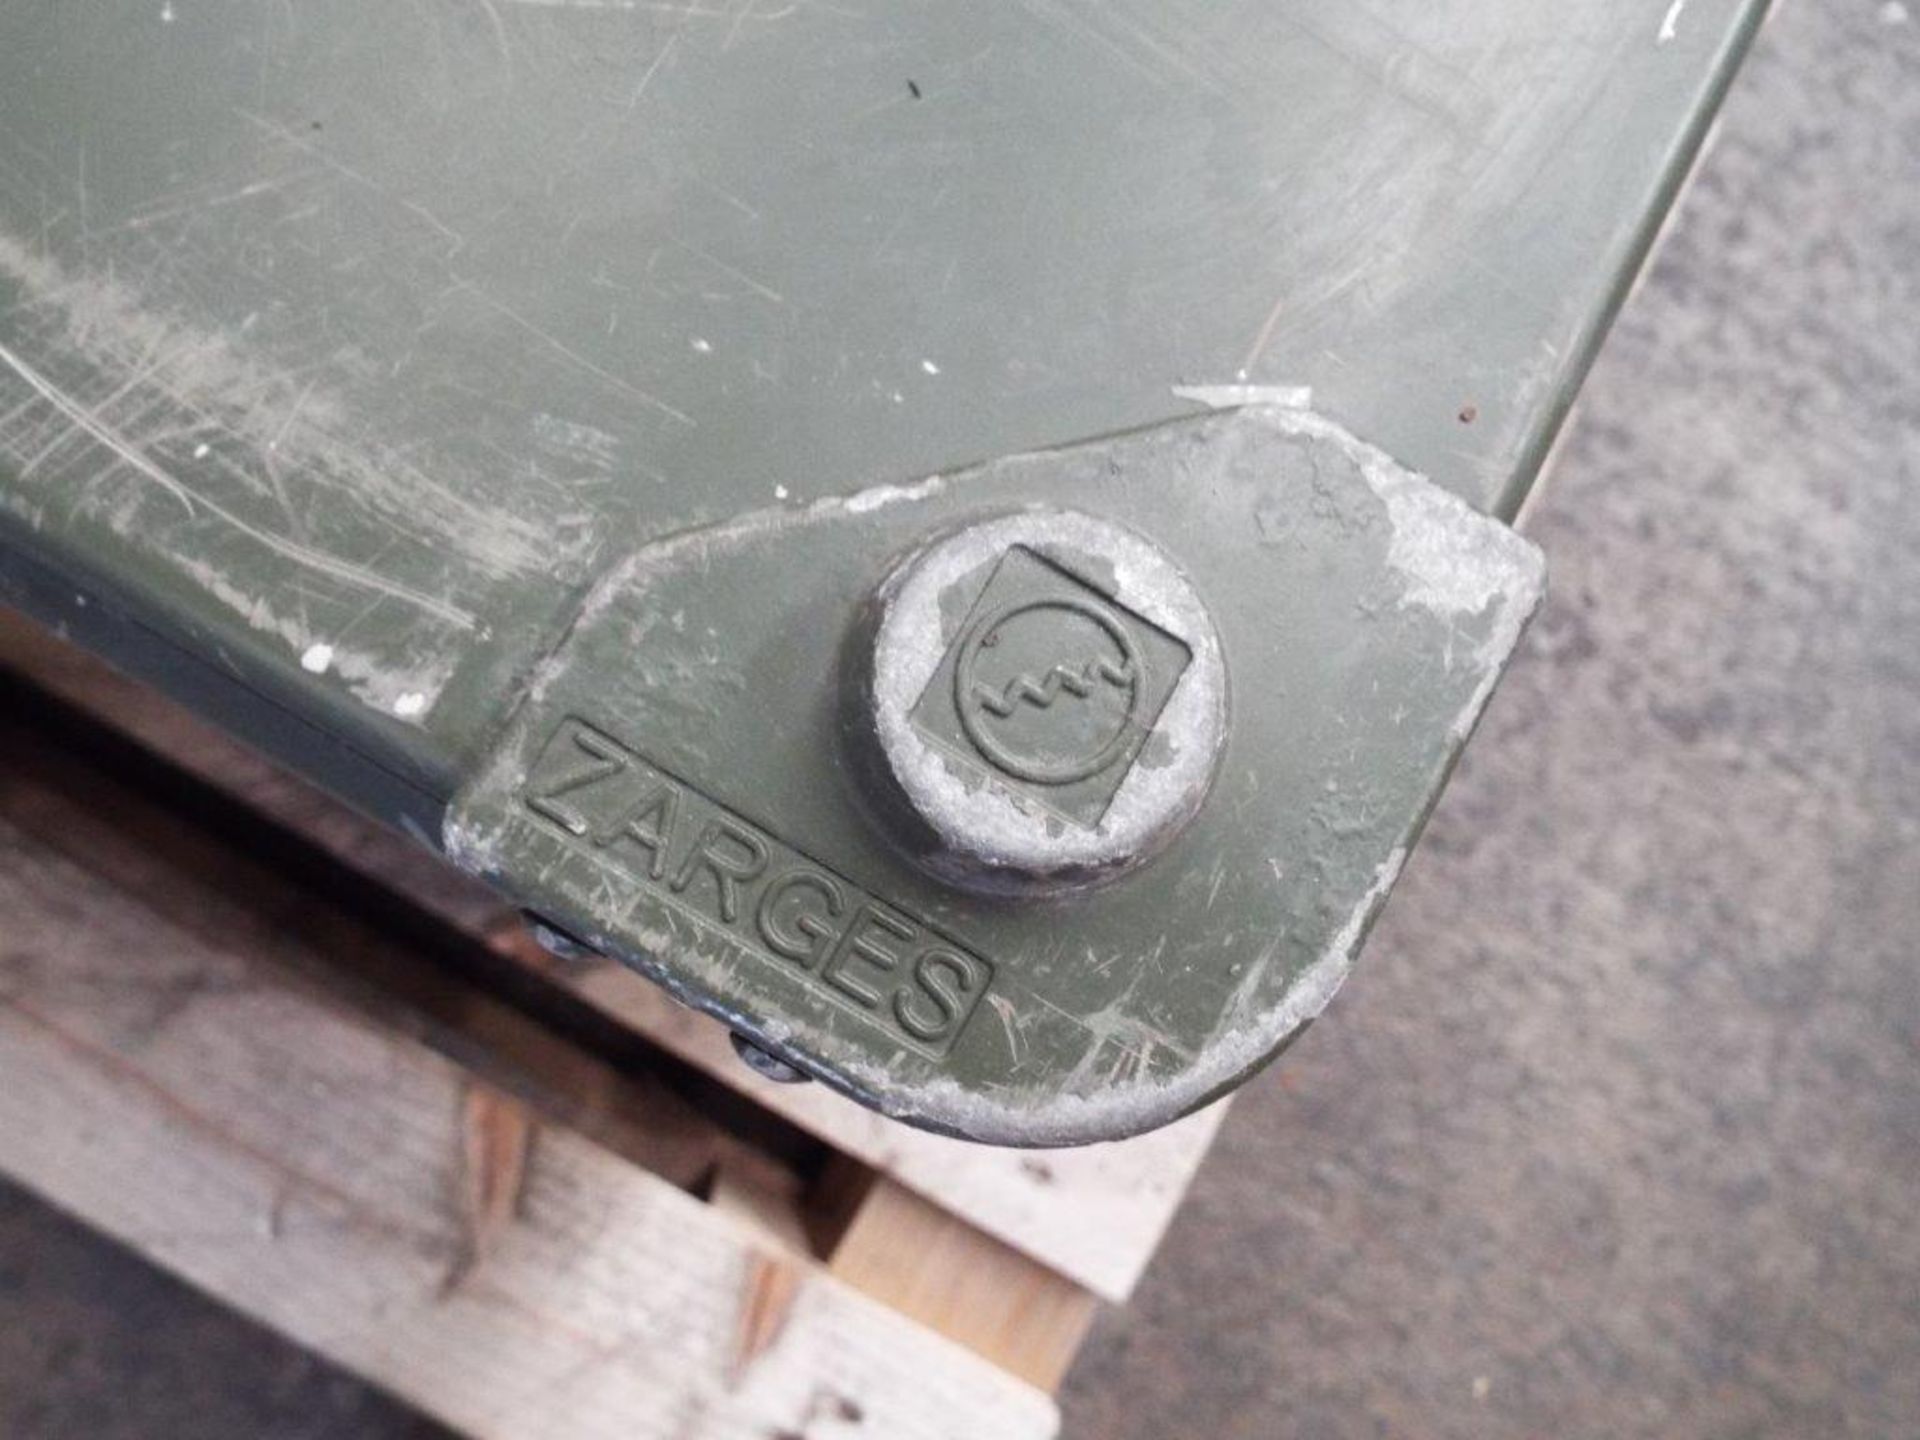 Windscreen Repair Kit in Zarges Aluminium Case - Image 13 of 14